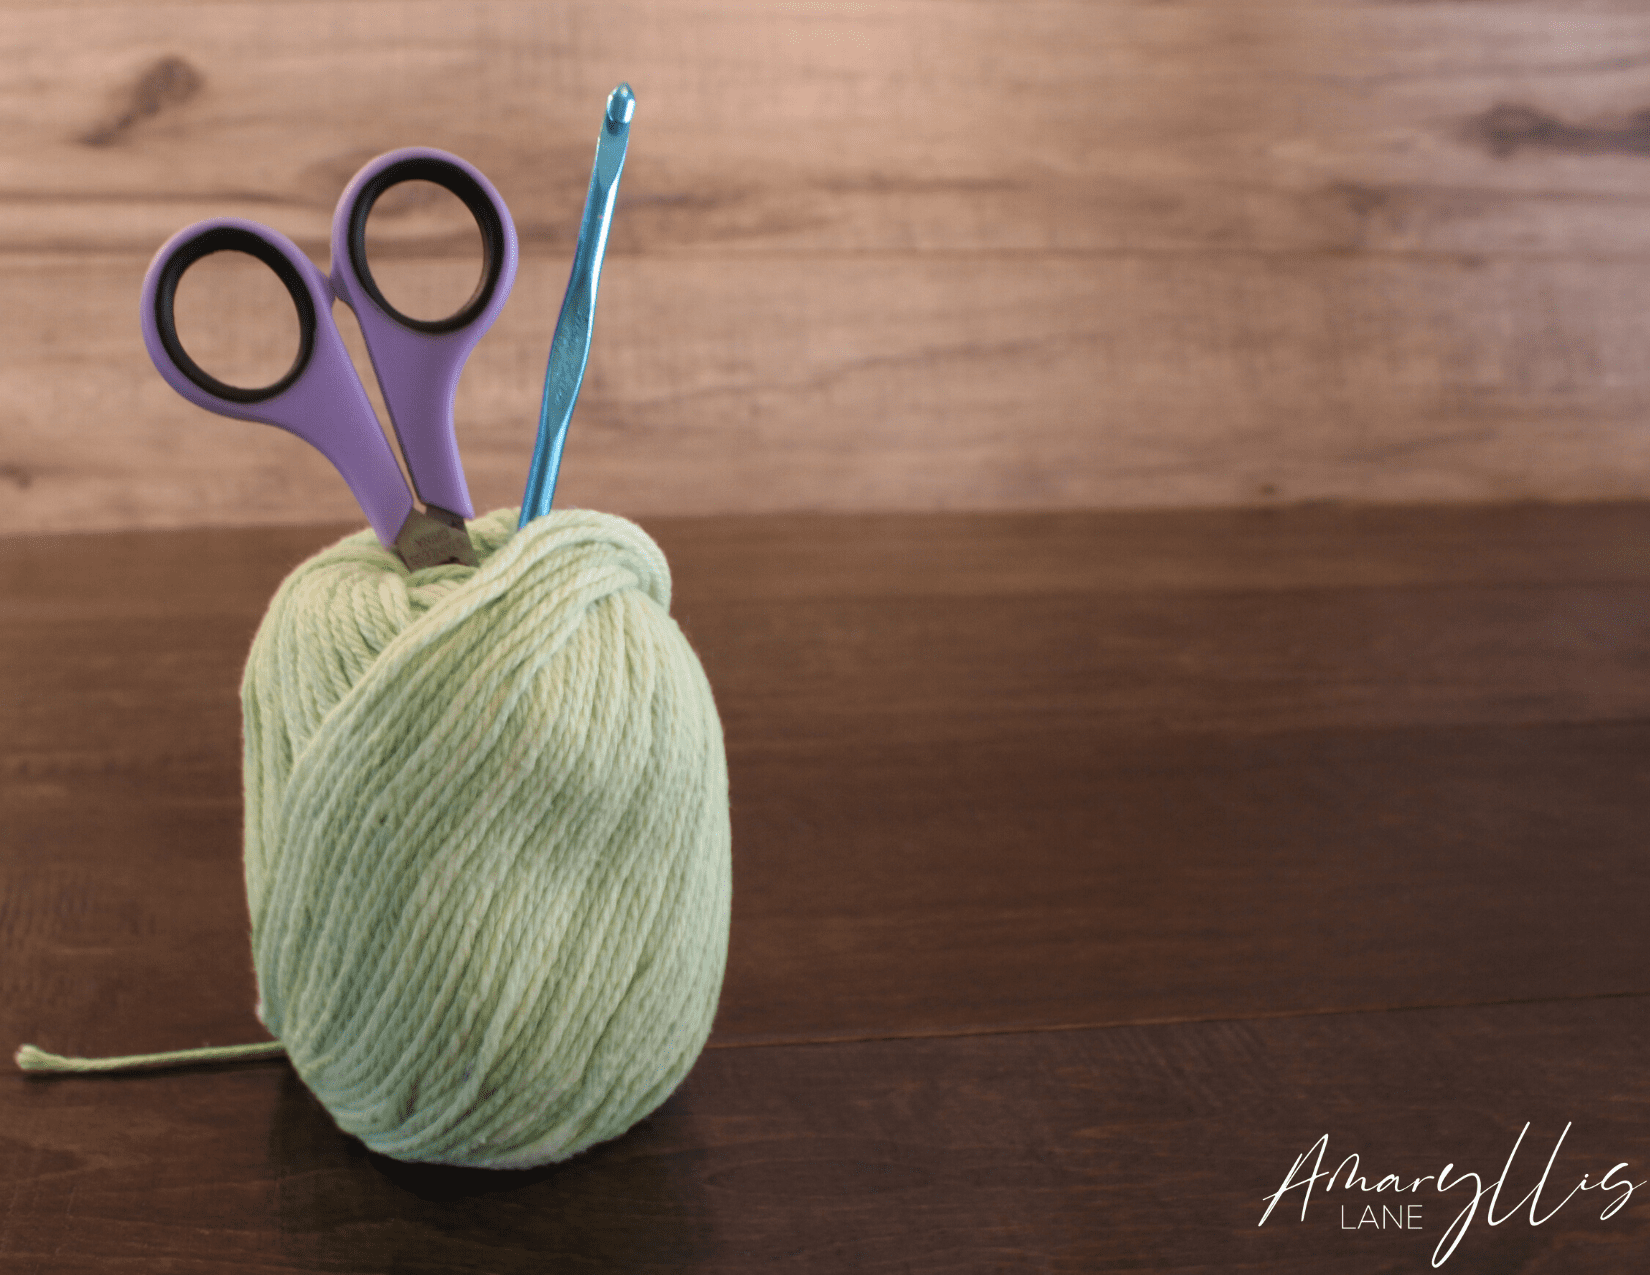 Amaryllis Lane | DIY Crochet Washcloths